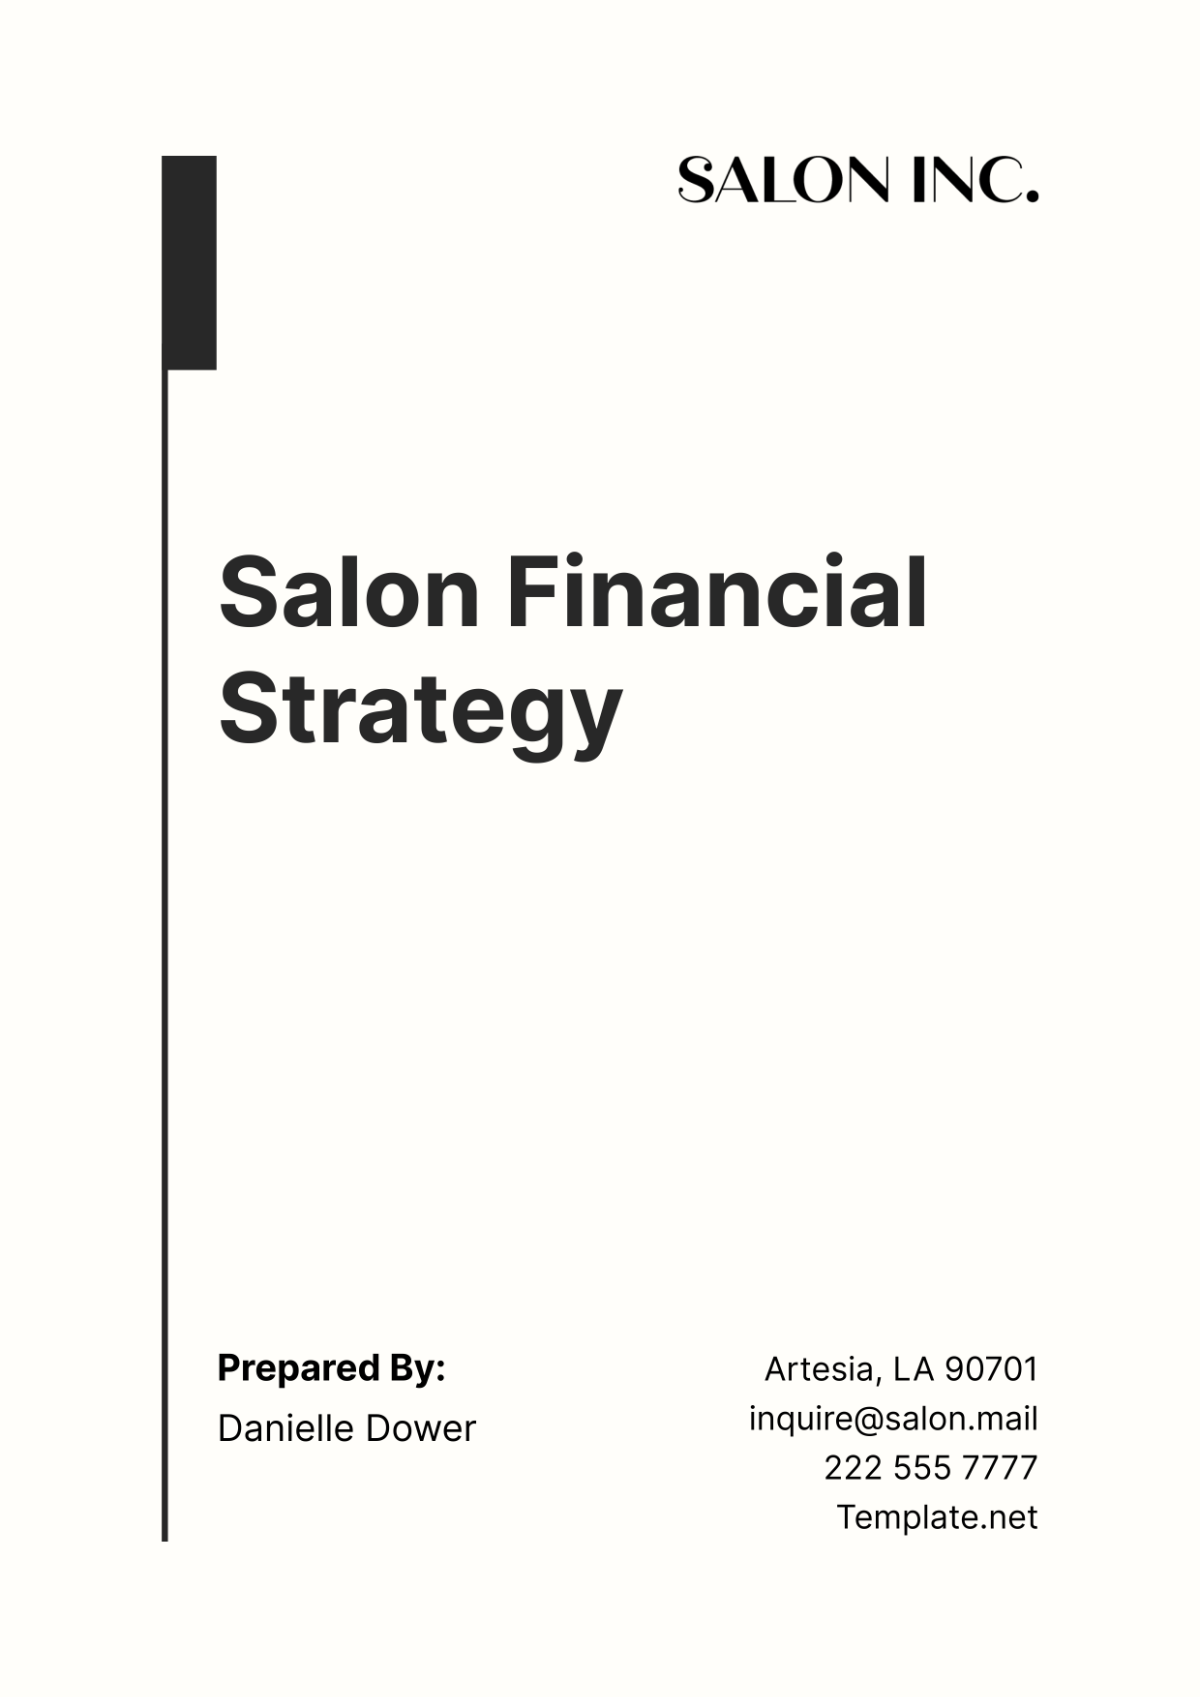 Salon Financial Strategy Template